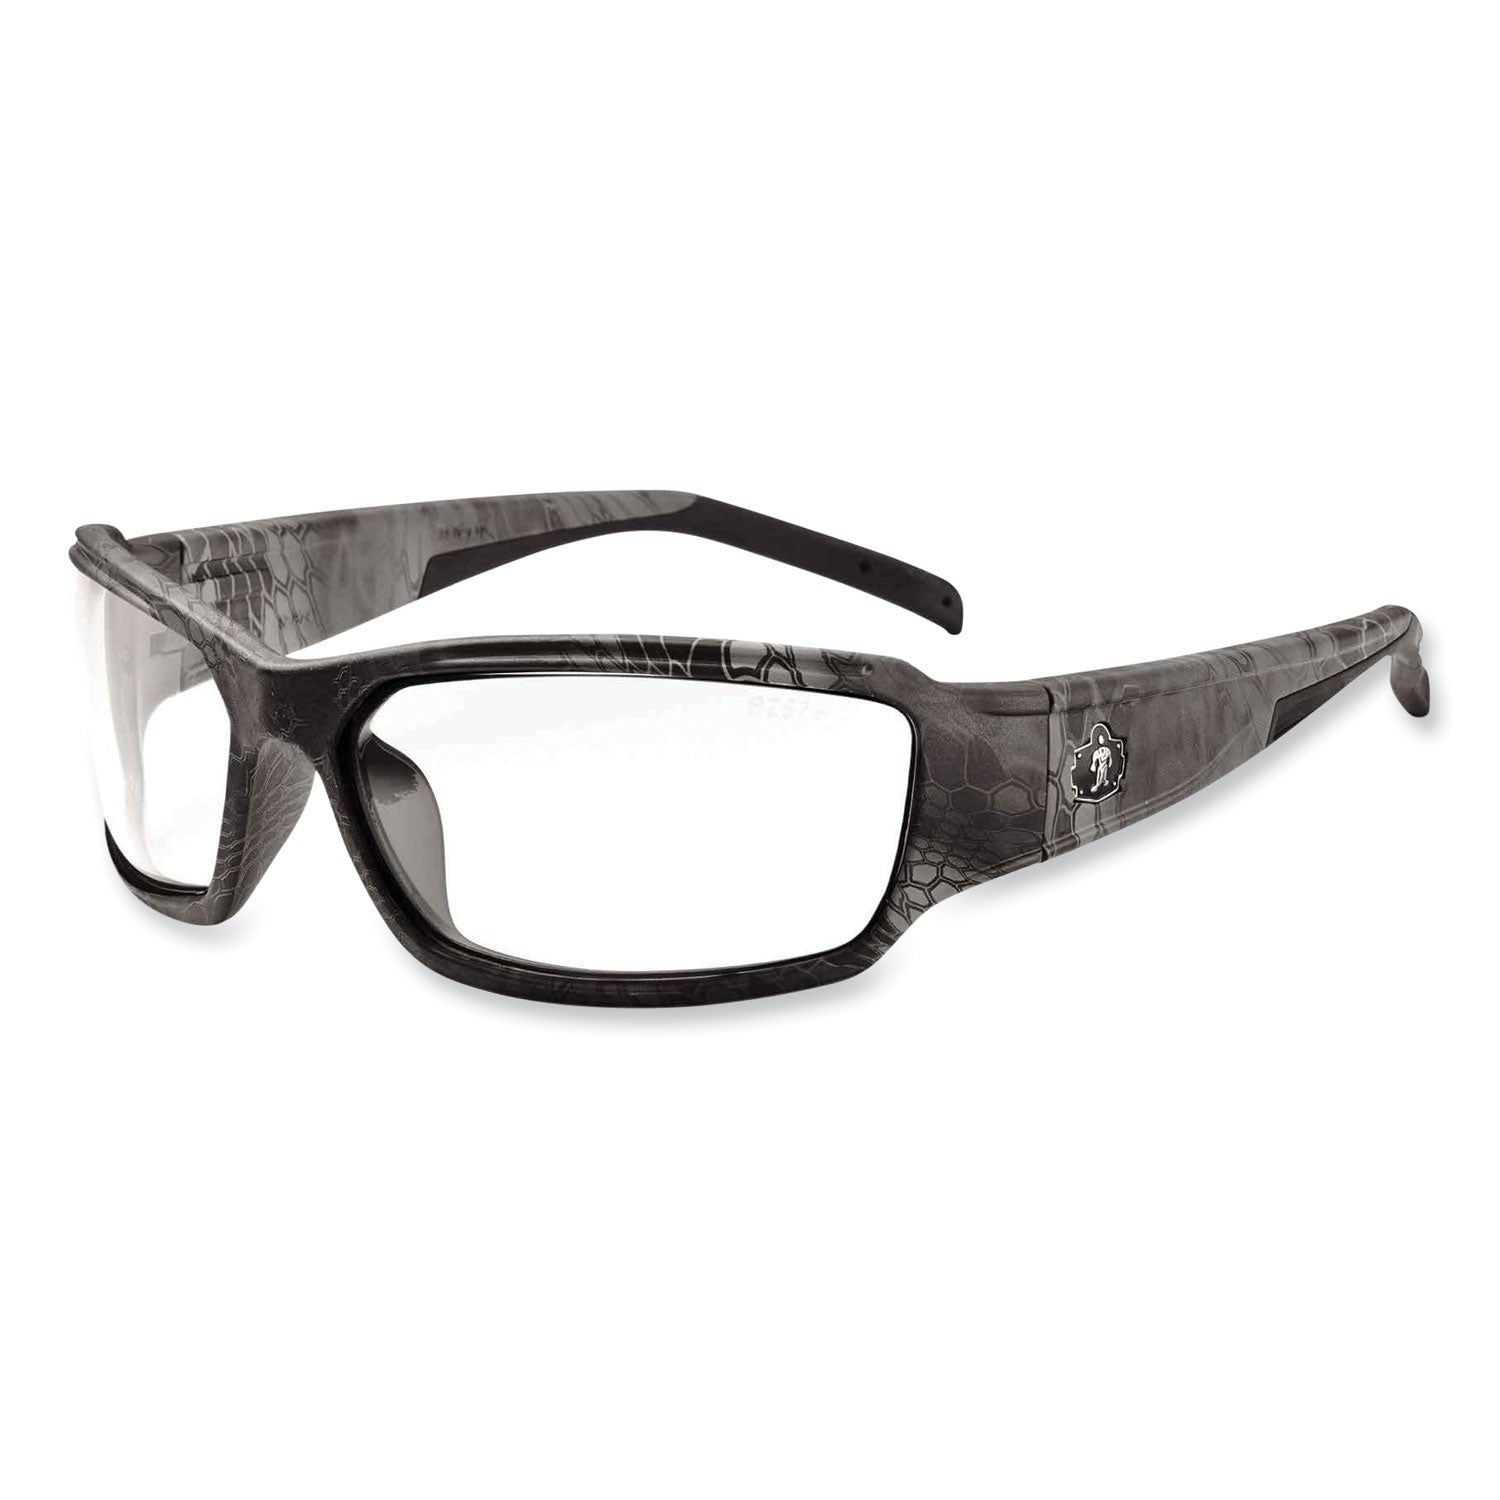 skullerz-thor-safety-glasses-kryptek-tyhpon-nylon-impact-frame-clear-polycarbonate-lens-ships-in-1-3-business-days_ego51300 - 1